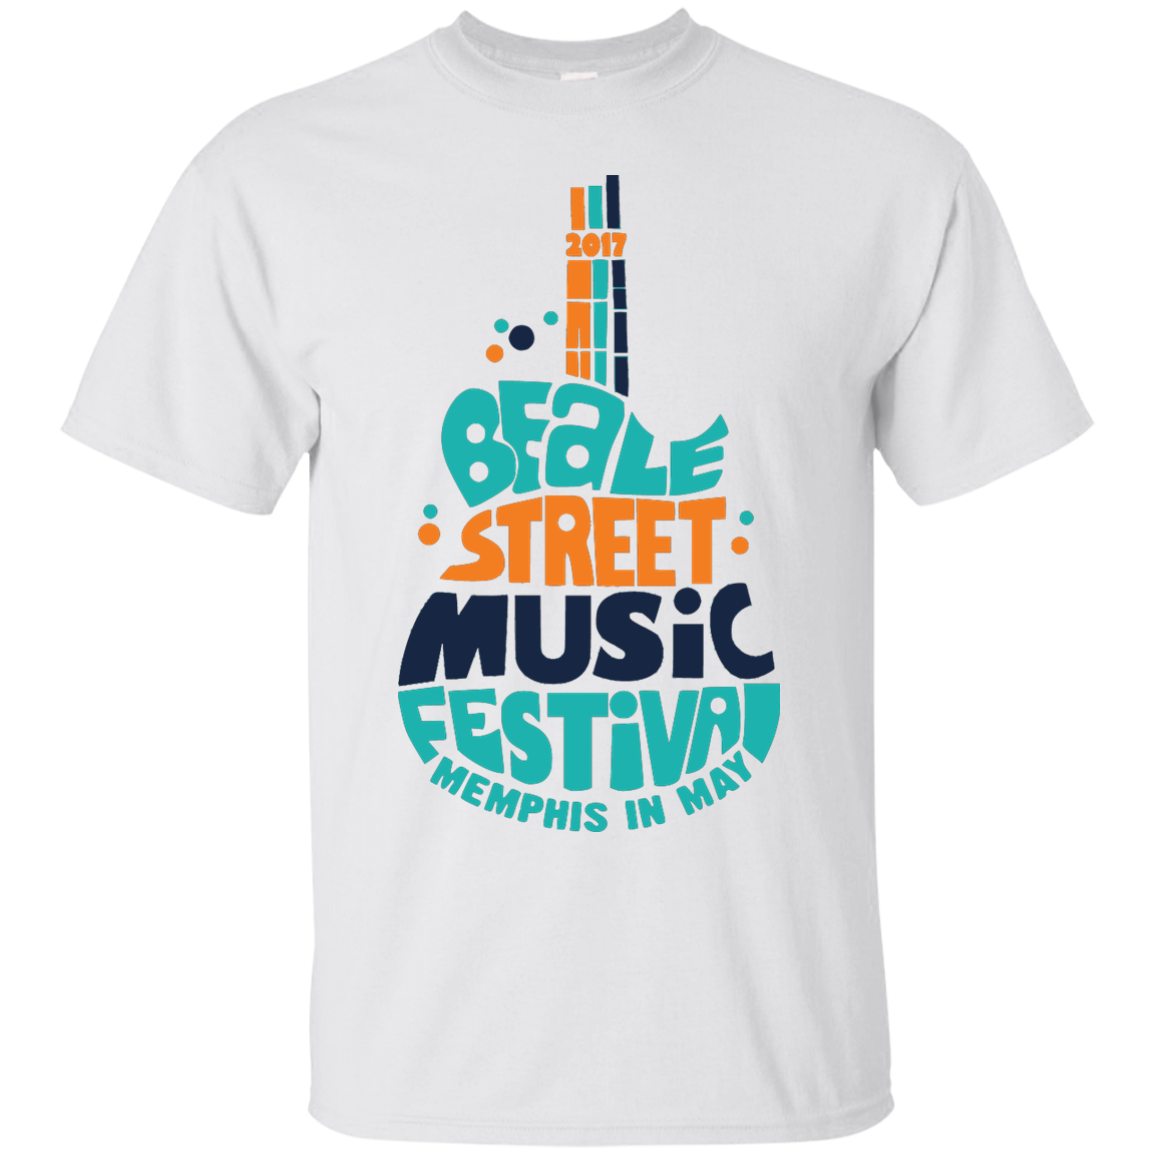 Beale Street Music Festival Memphis in May shirt